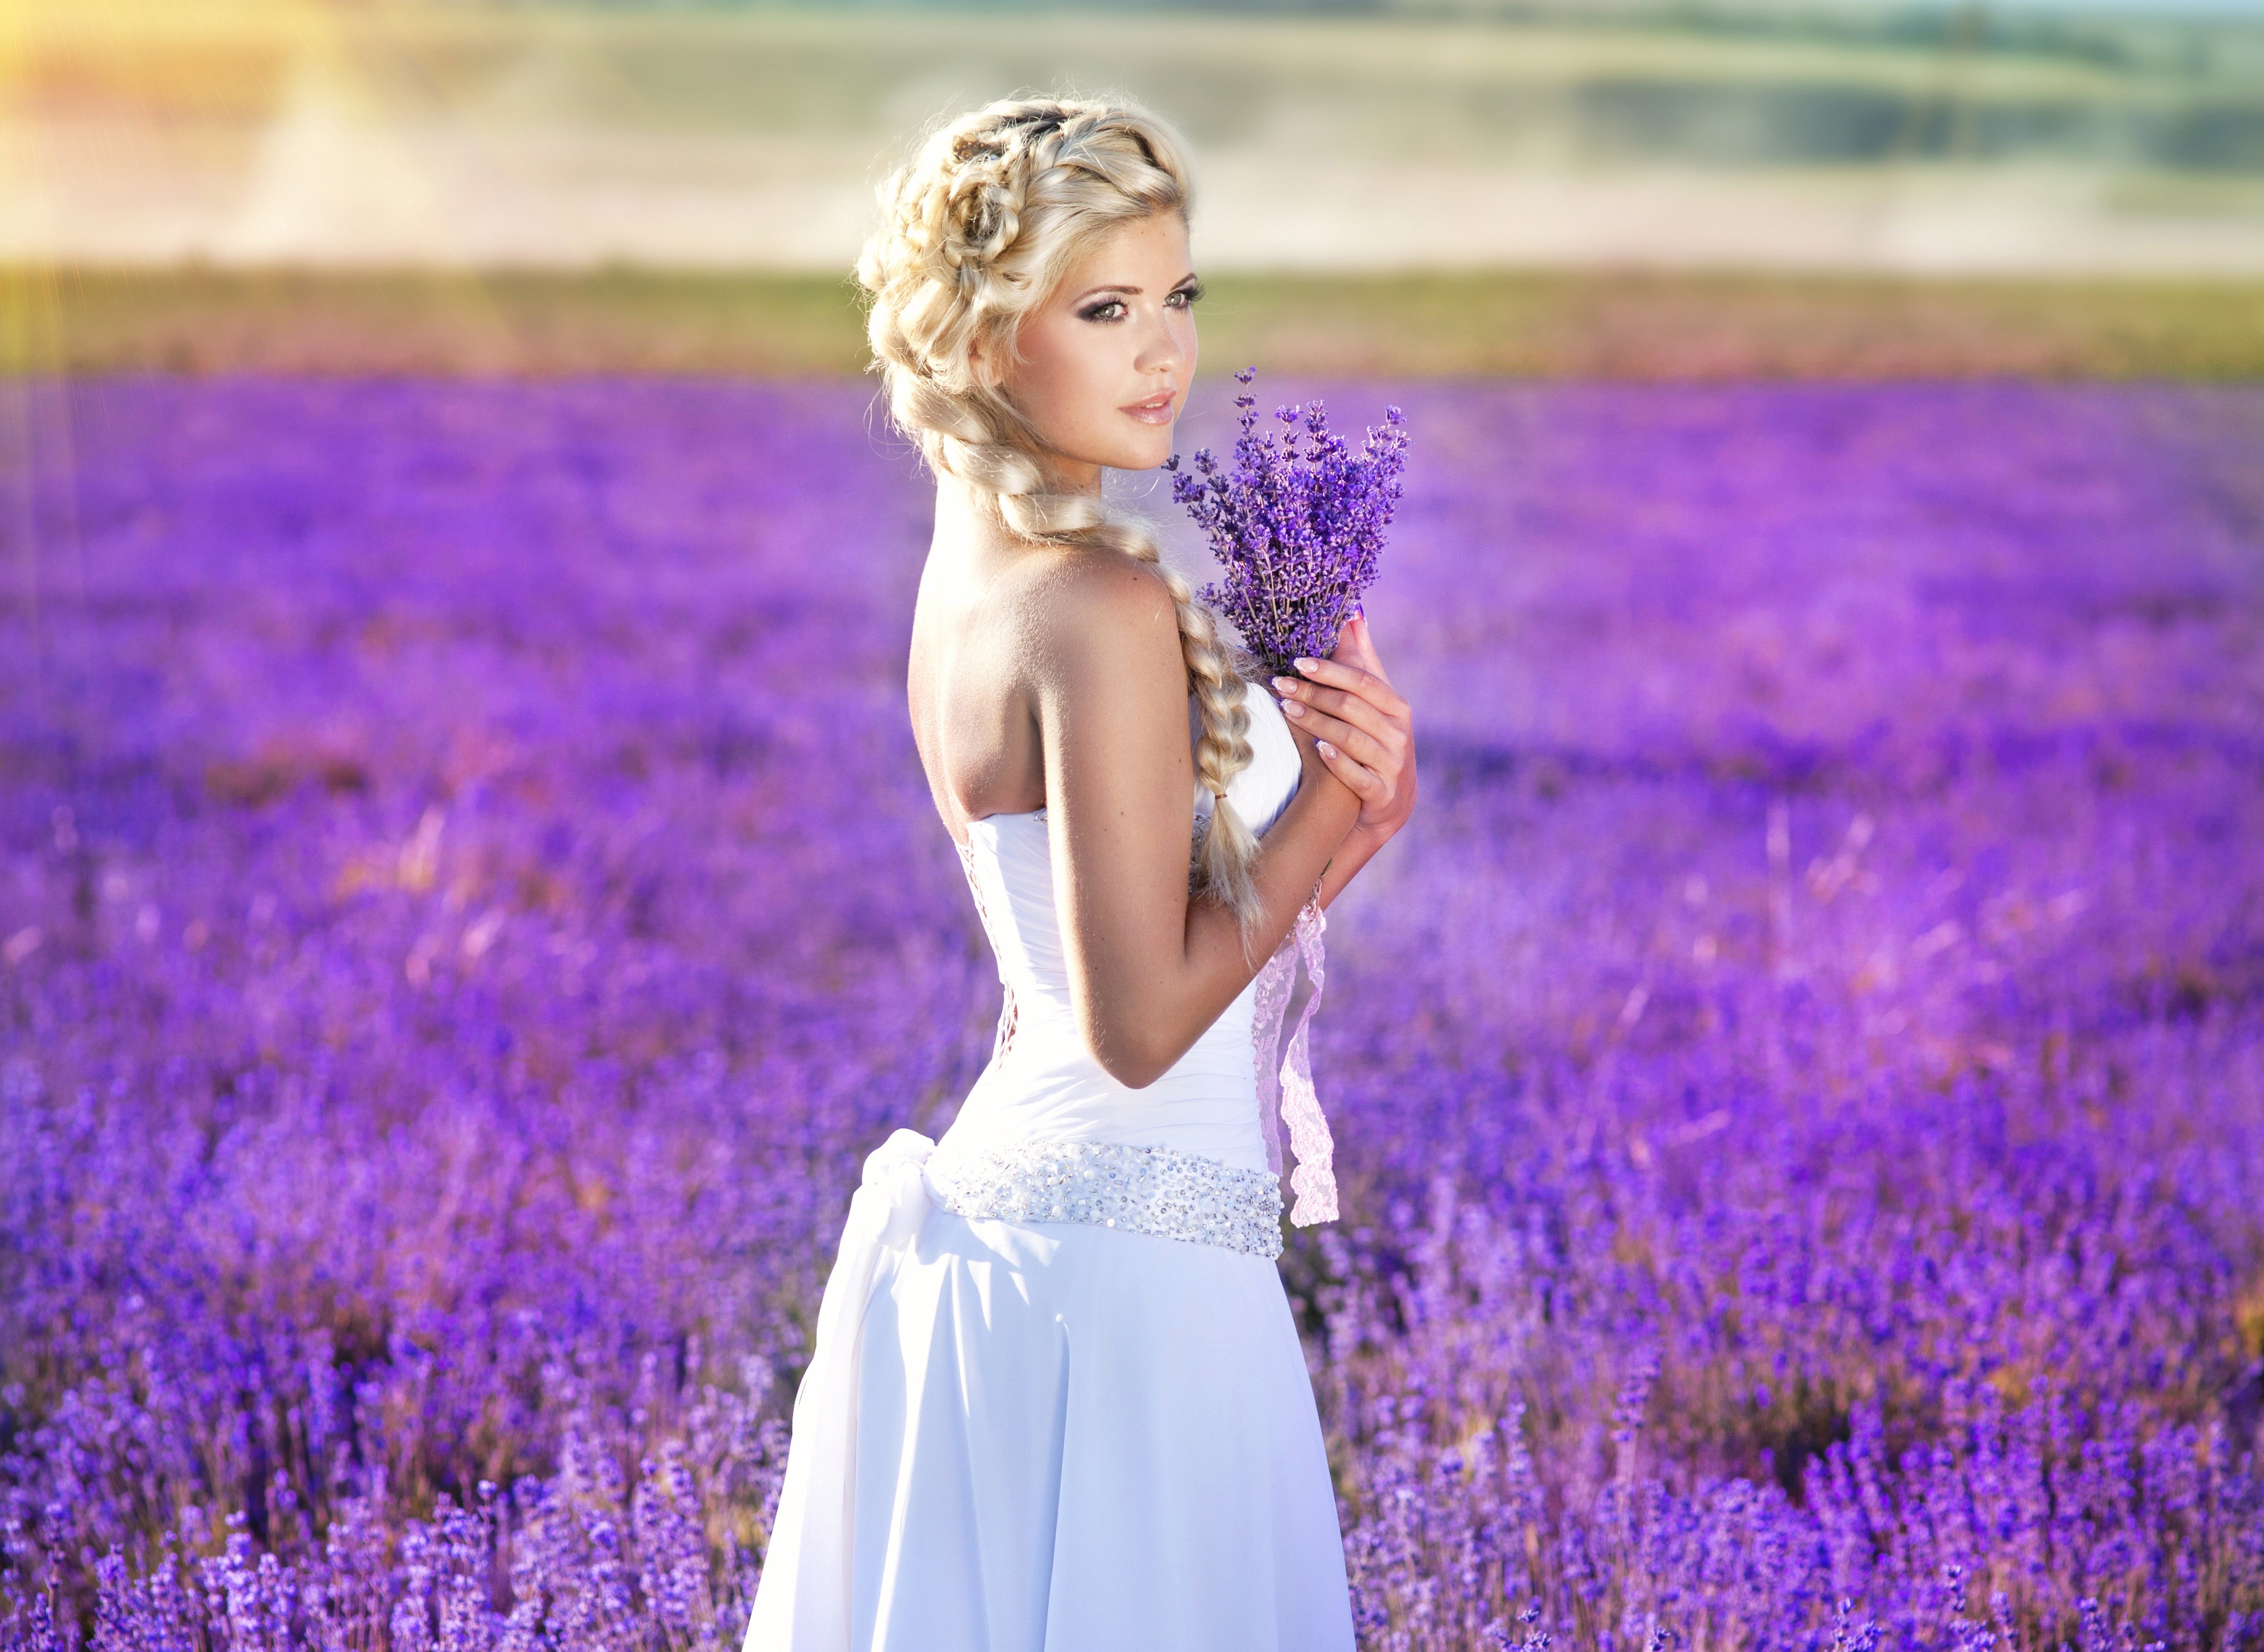 women, bride, bouquet, dress, flower, lavender, plait, wedding dress